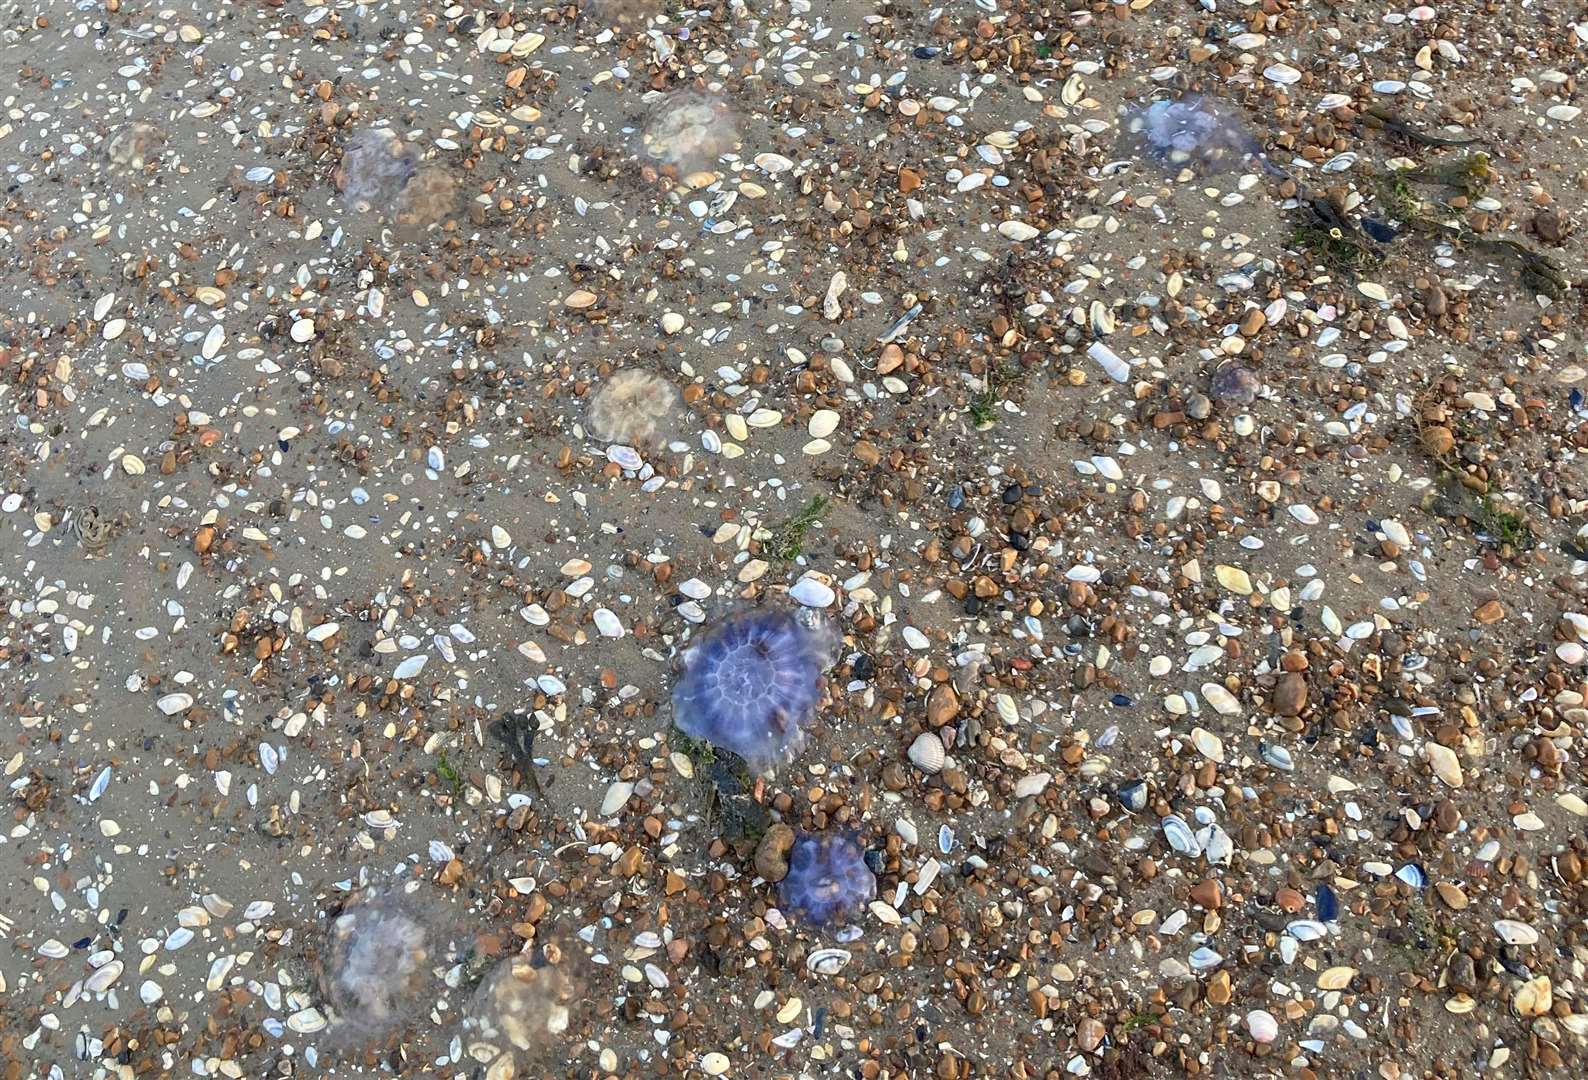 The jellyfish were scattered across Dymchurch Beach. Picture: Jenni Regan